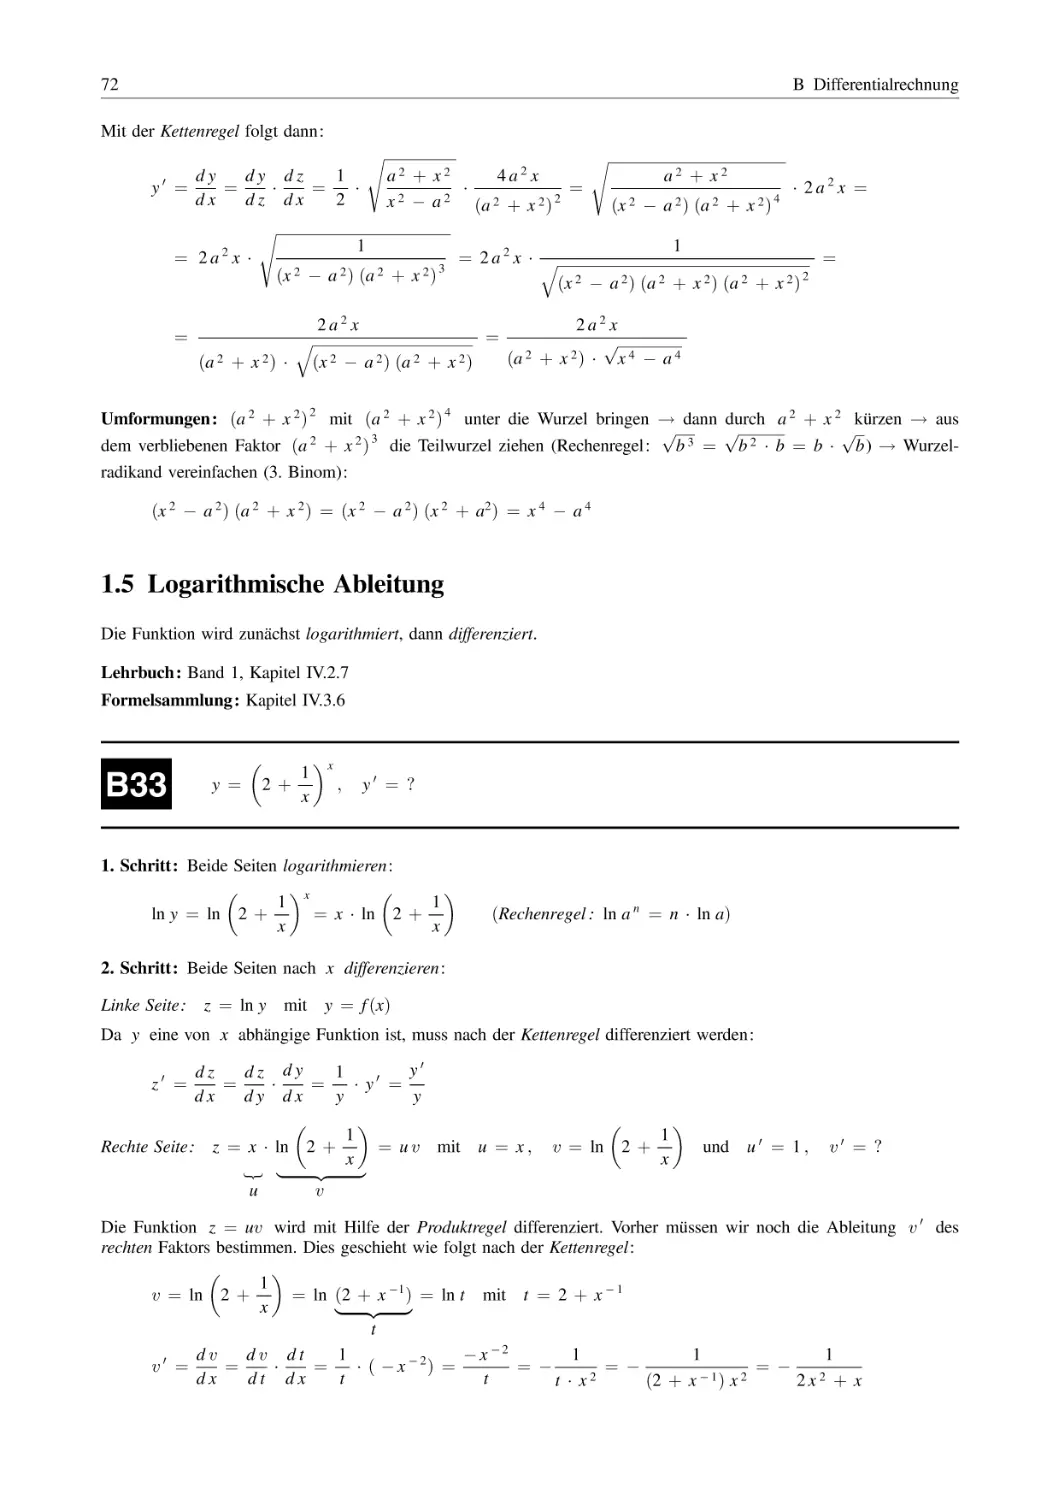 1.5 Logarithmische Ableitung